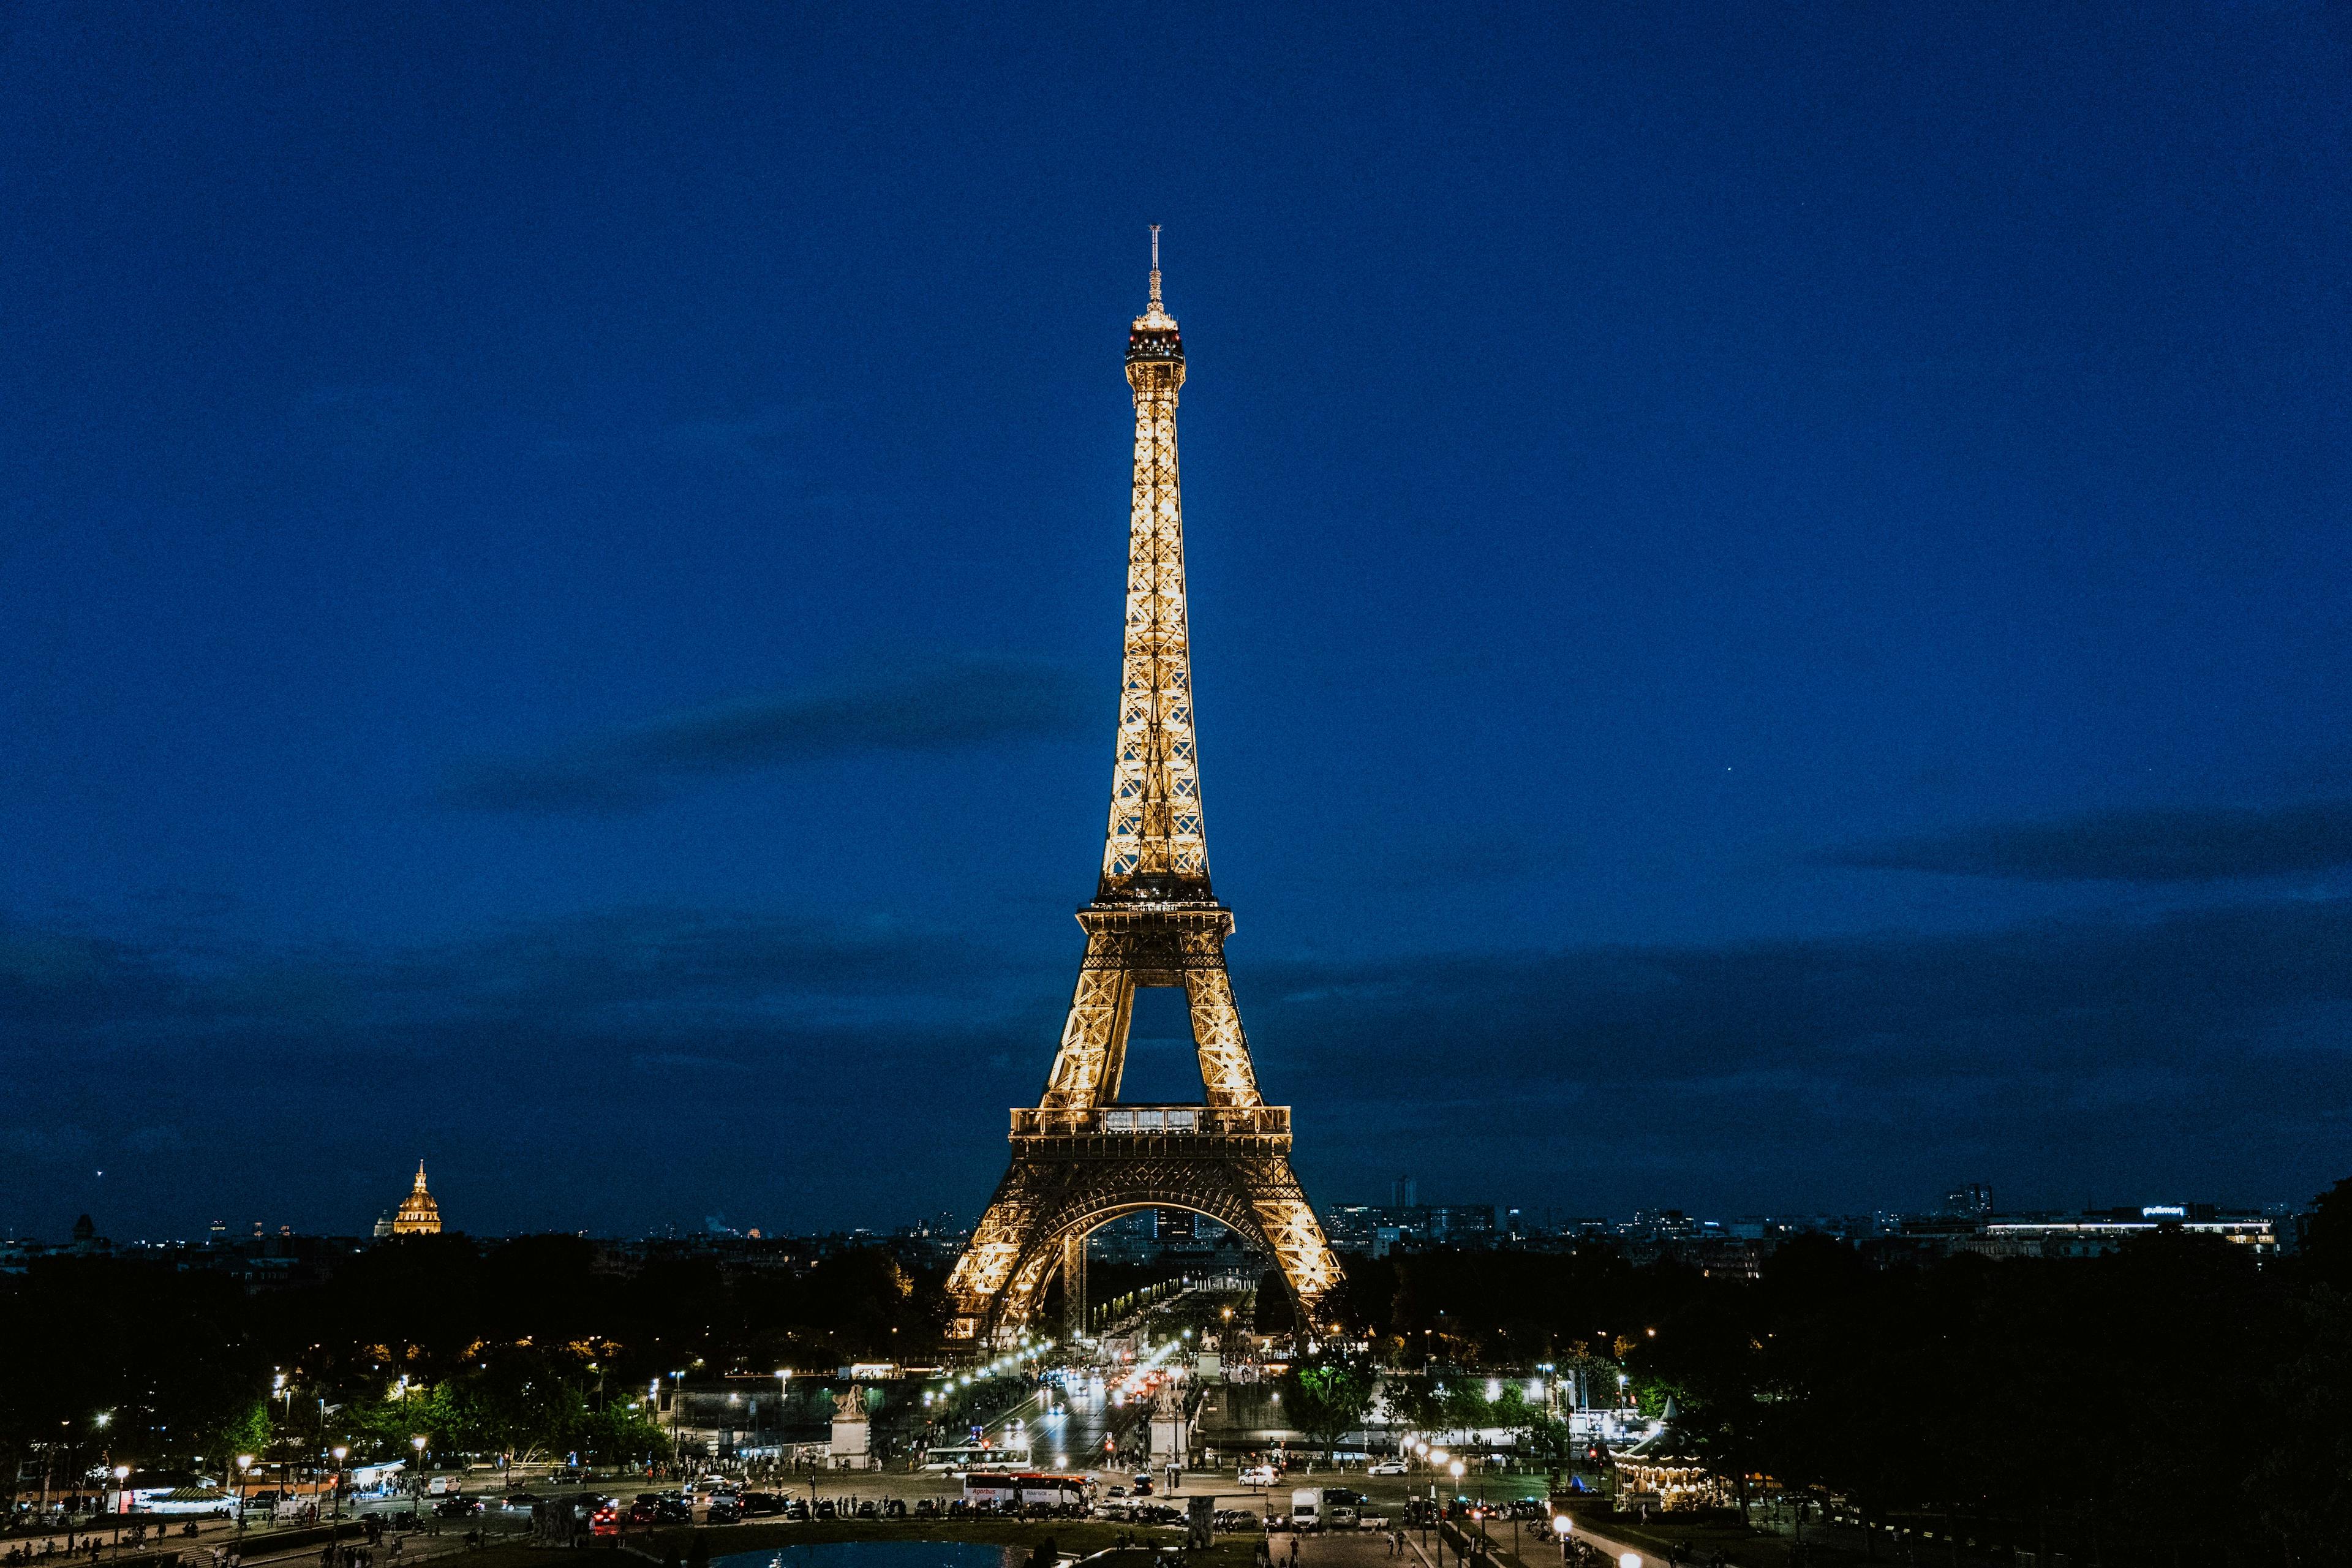 Eiffel Tower in Paris during night